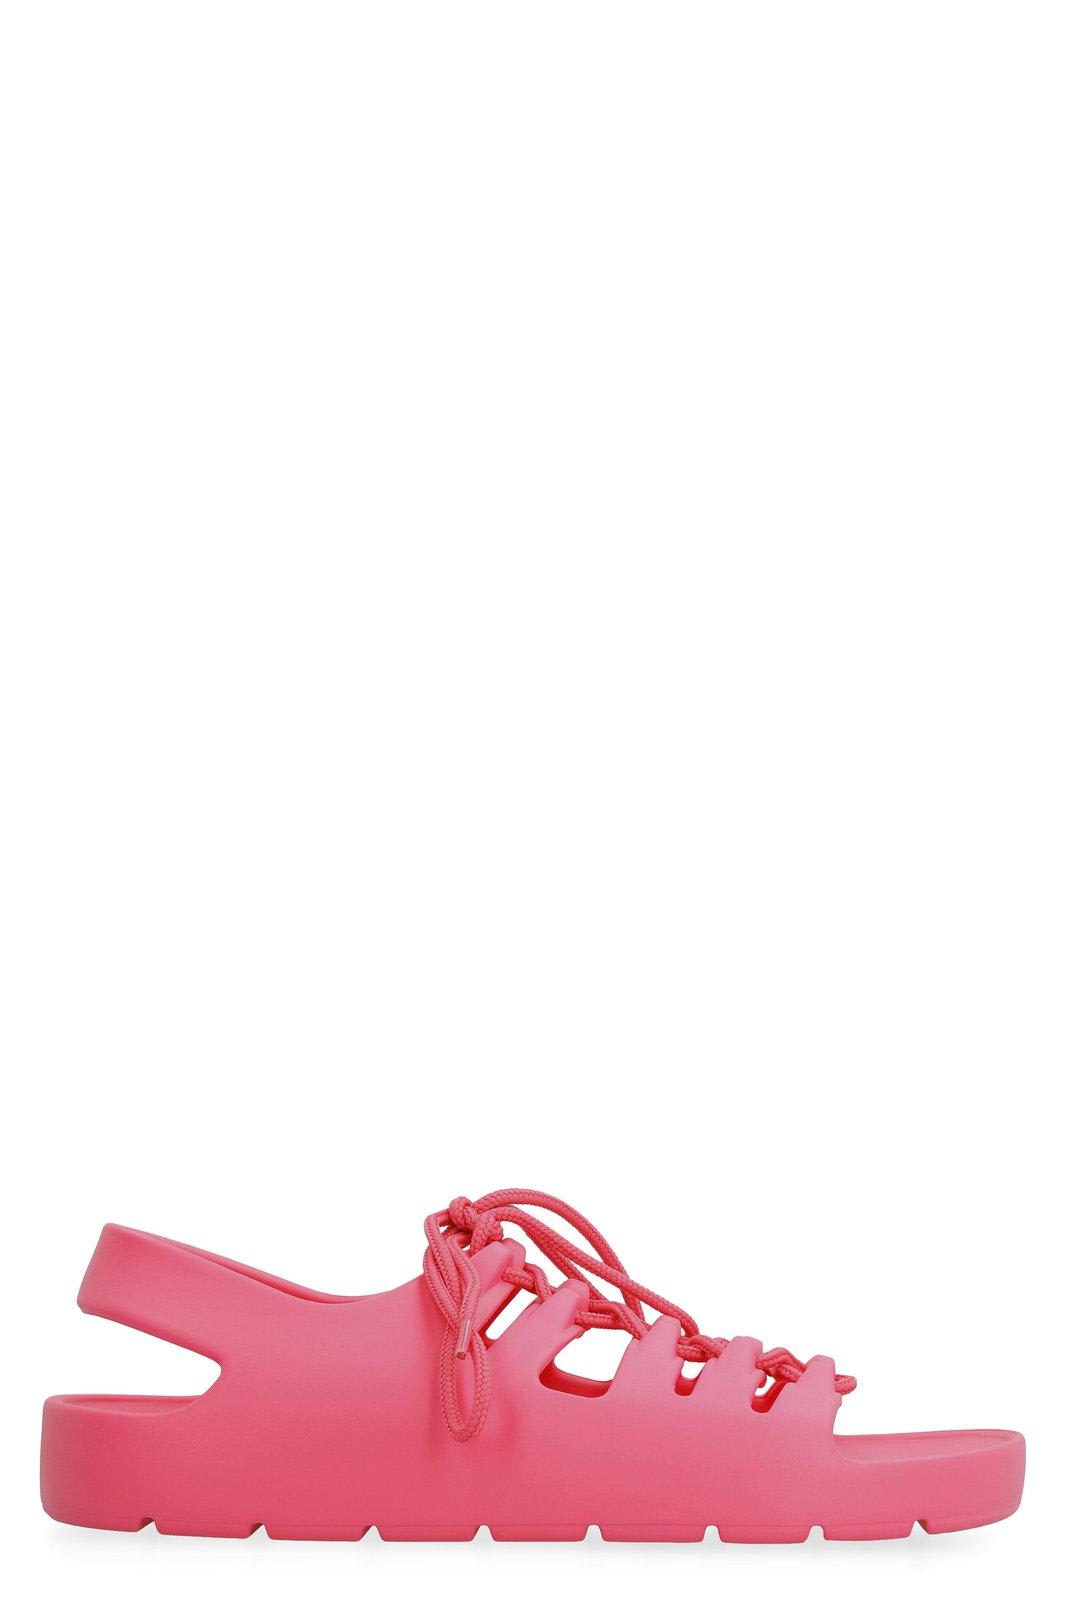 Bottega Veneta Jelly Lace-up Slingback Sandals